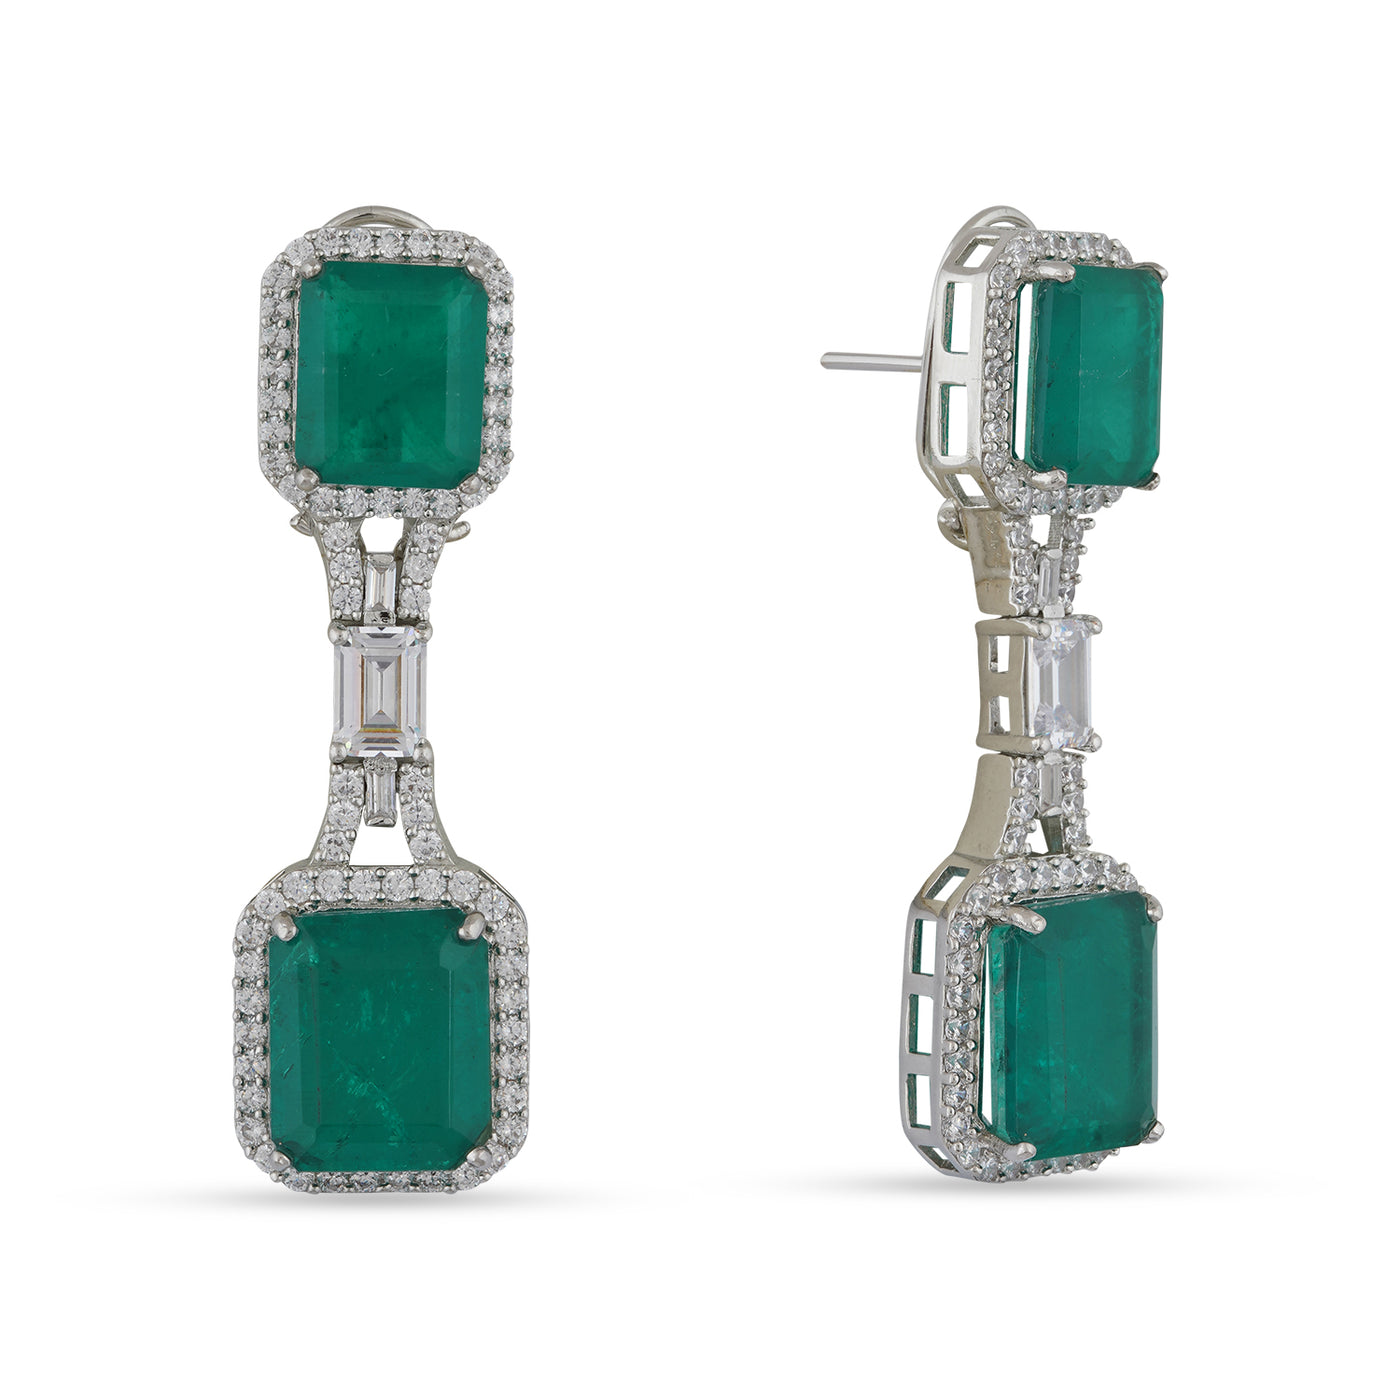 Emerald Green Stone Studded CZ Necklace Set